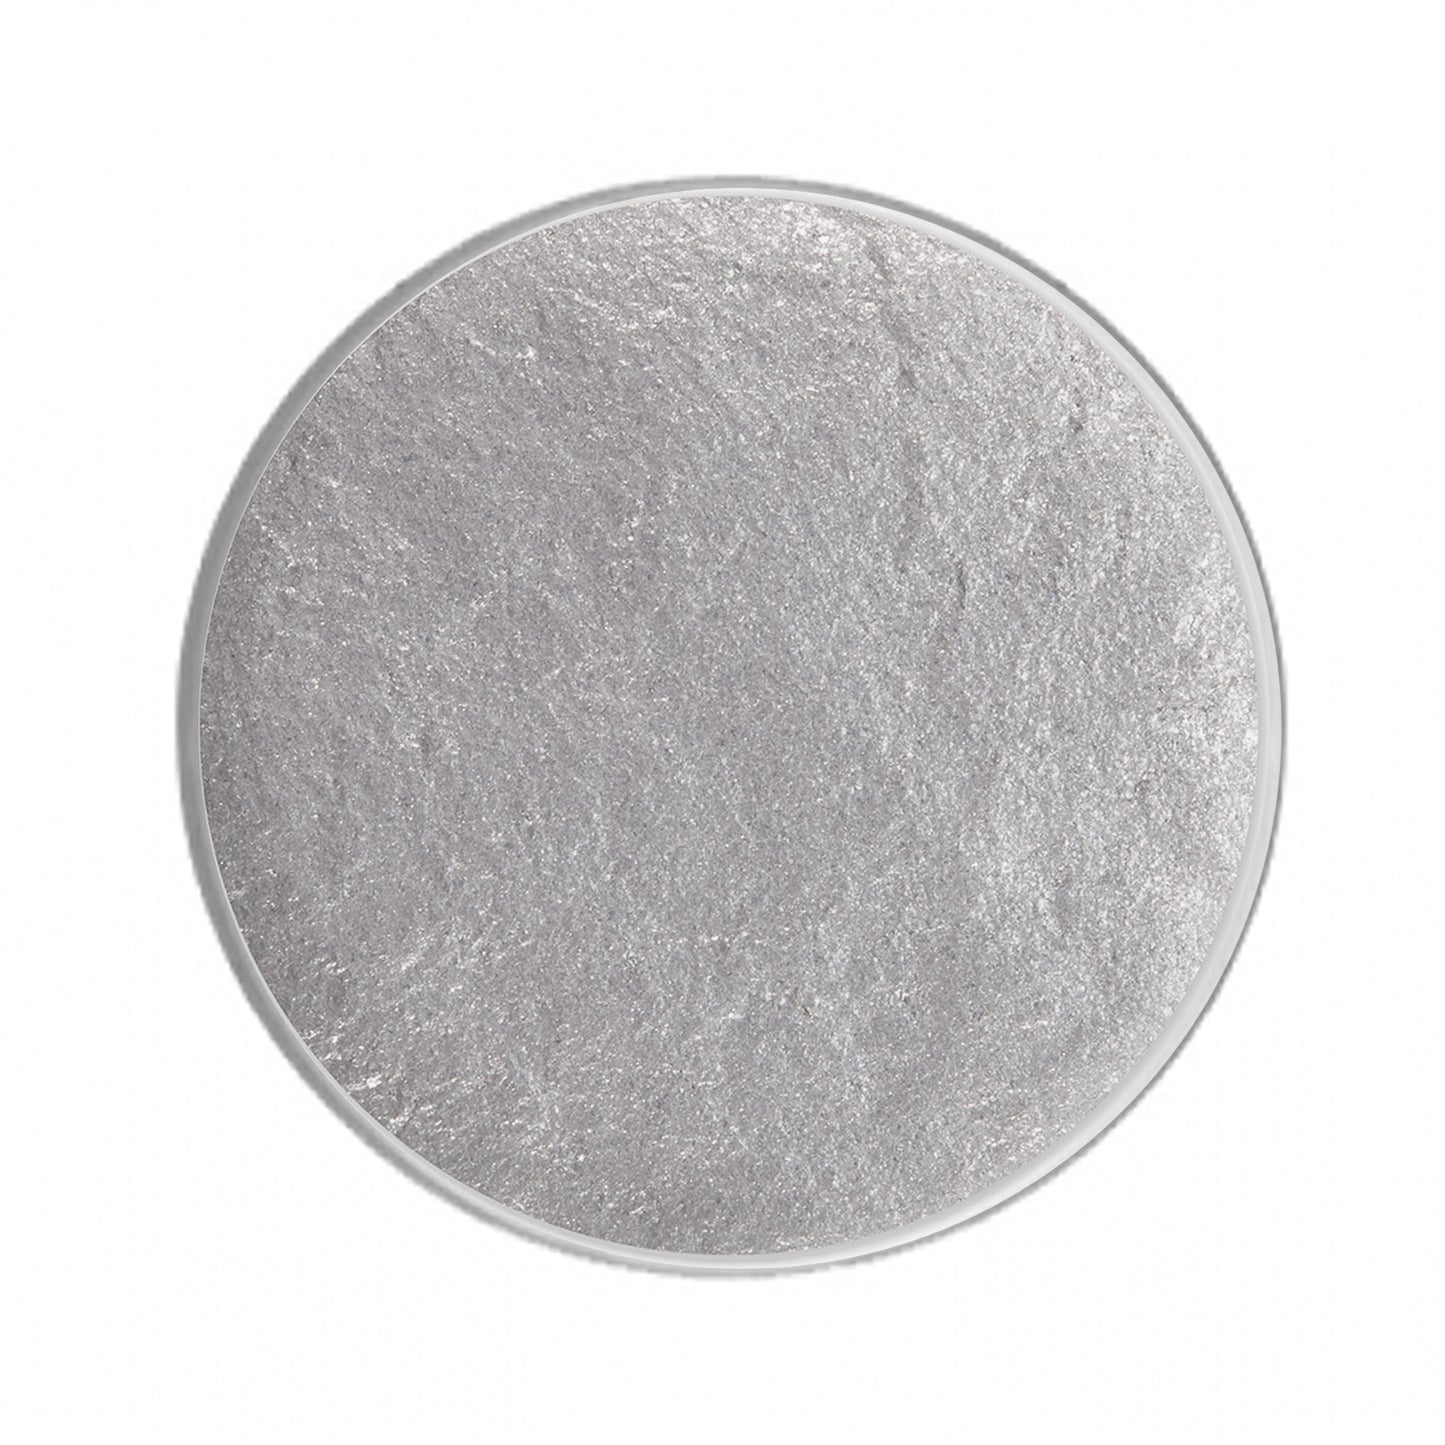 Kryolan Aquacolor Silver Face Paint Refill - Metallic Silver 4 ml